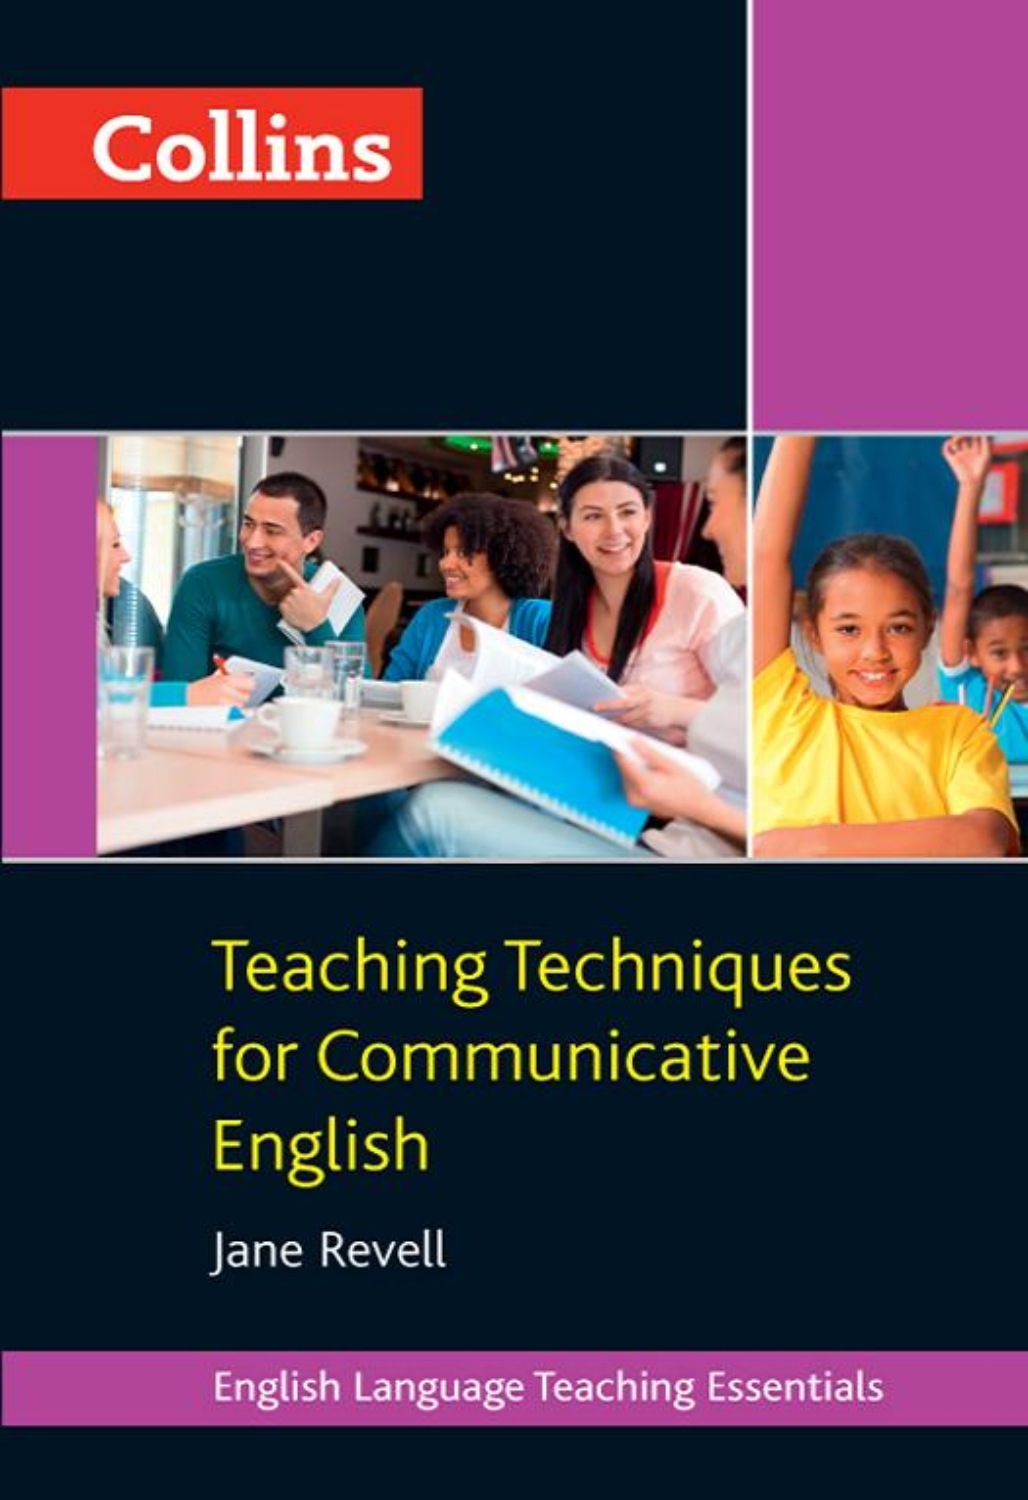 Language teaching techniques. Teaching techniques. Techniques of teaching English language. Teaching techniques in English. English language teaching book.